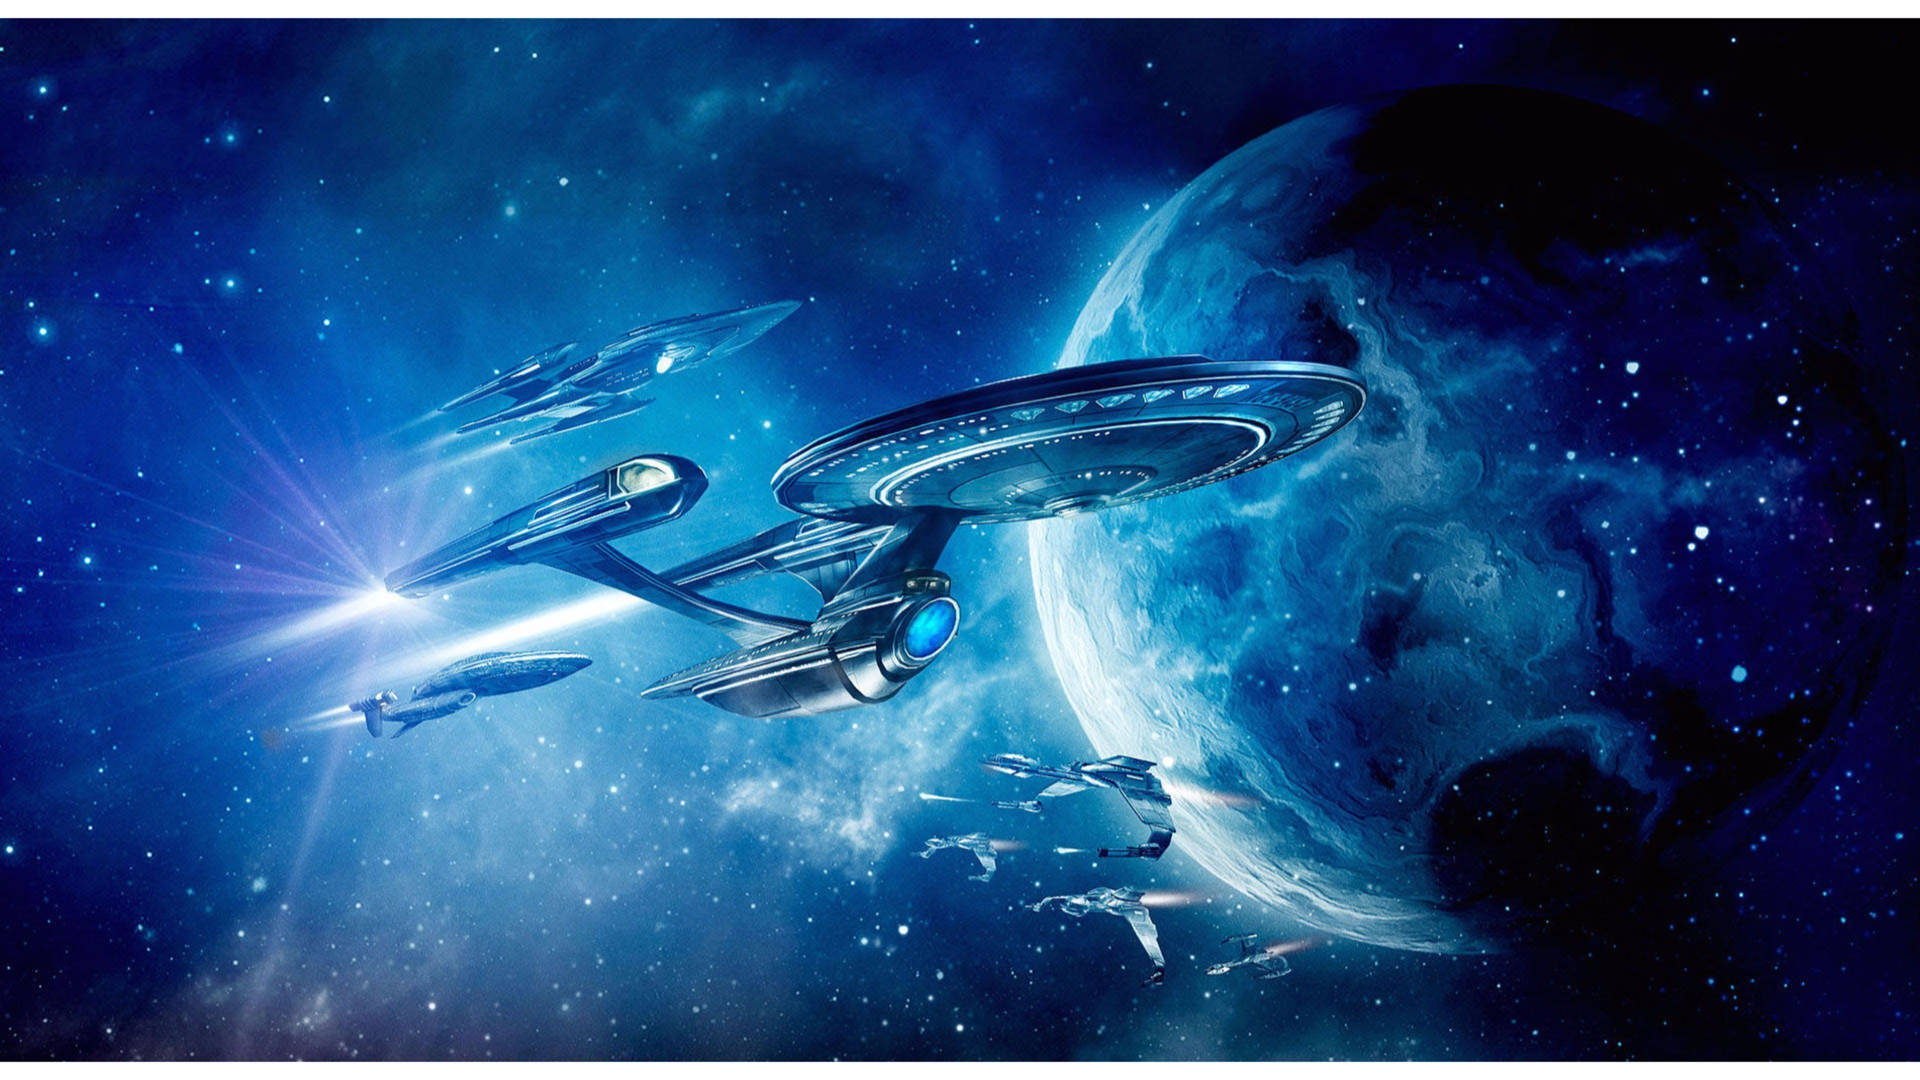 Blue color theme wallpaper of Star Trek ship. 